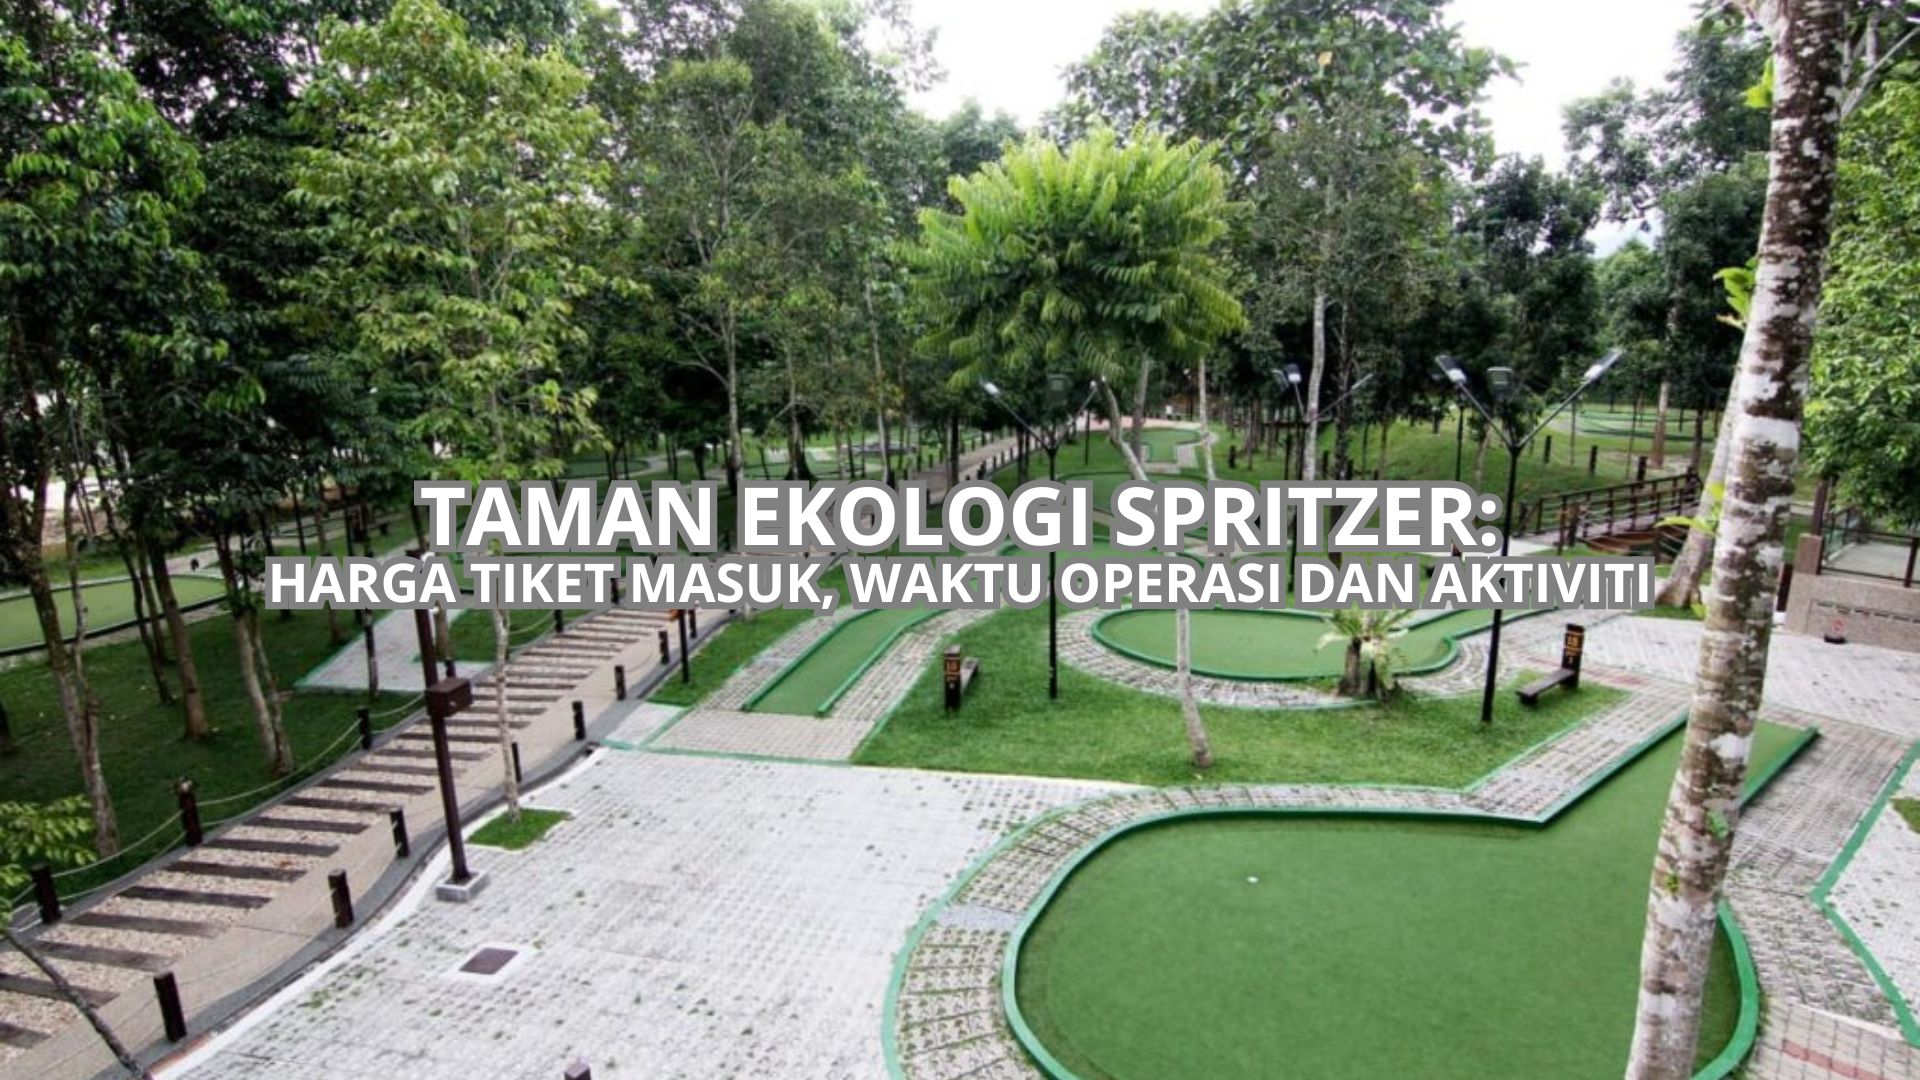 Taman Ekologi Spritzer Cover